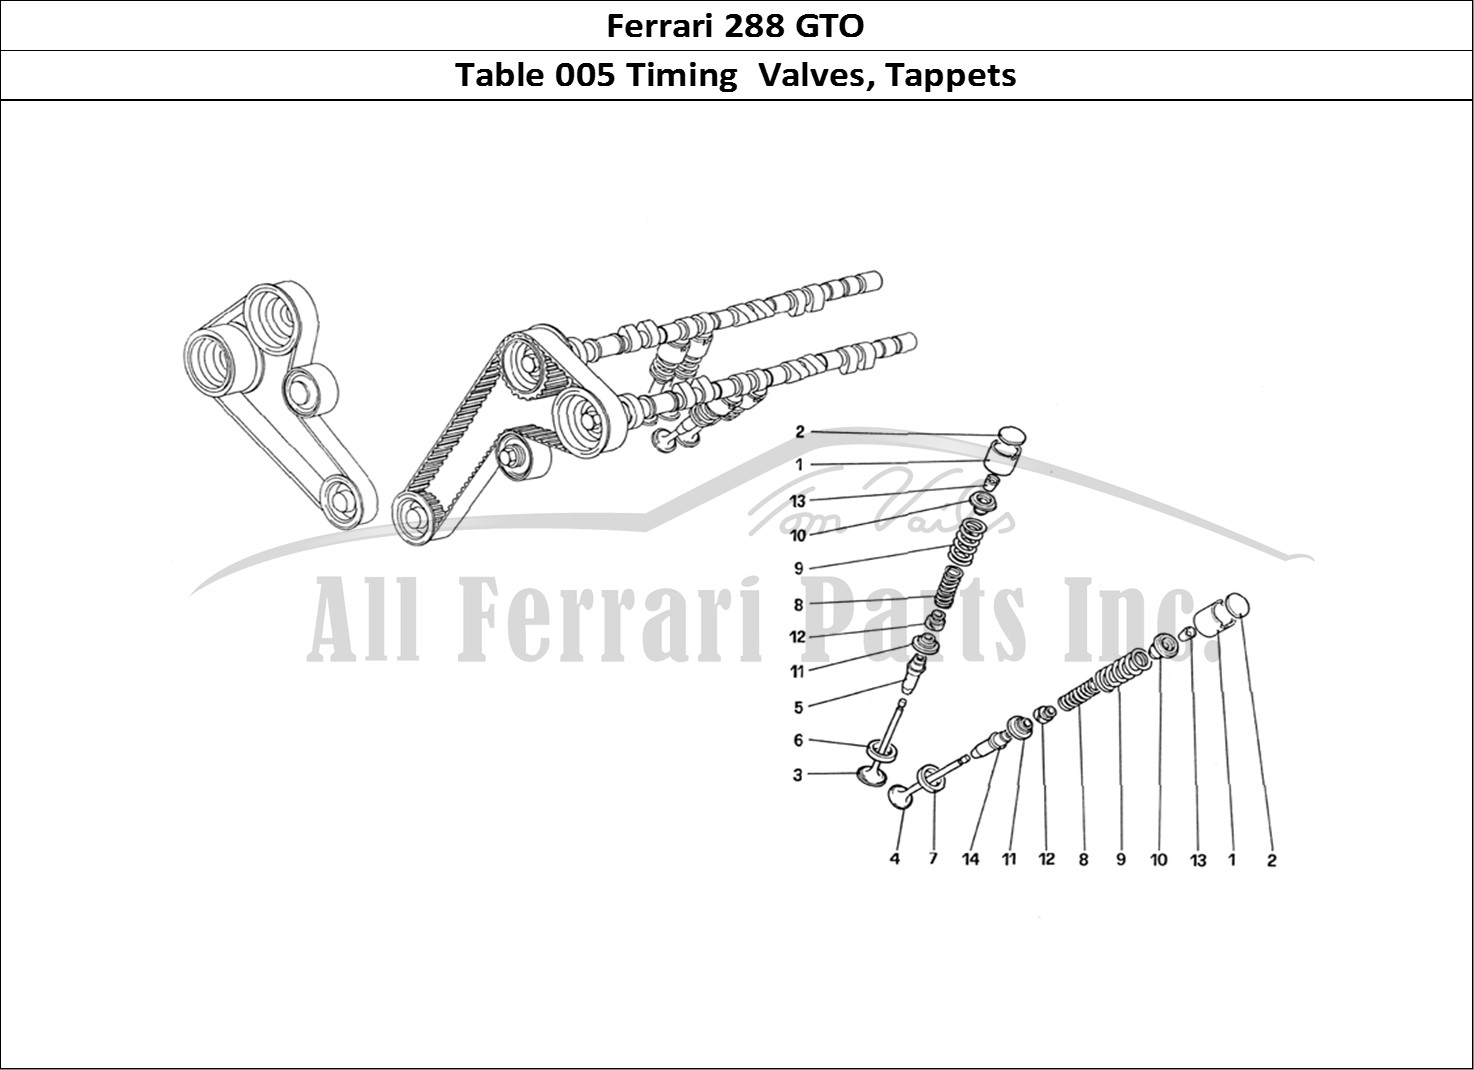 Ferrari Parts Ferrari 288 GTO Page 005 Timing System - Tappets